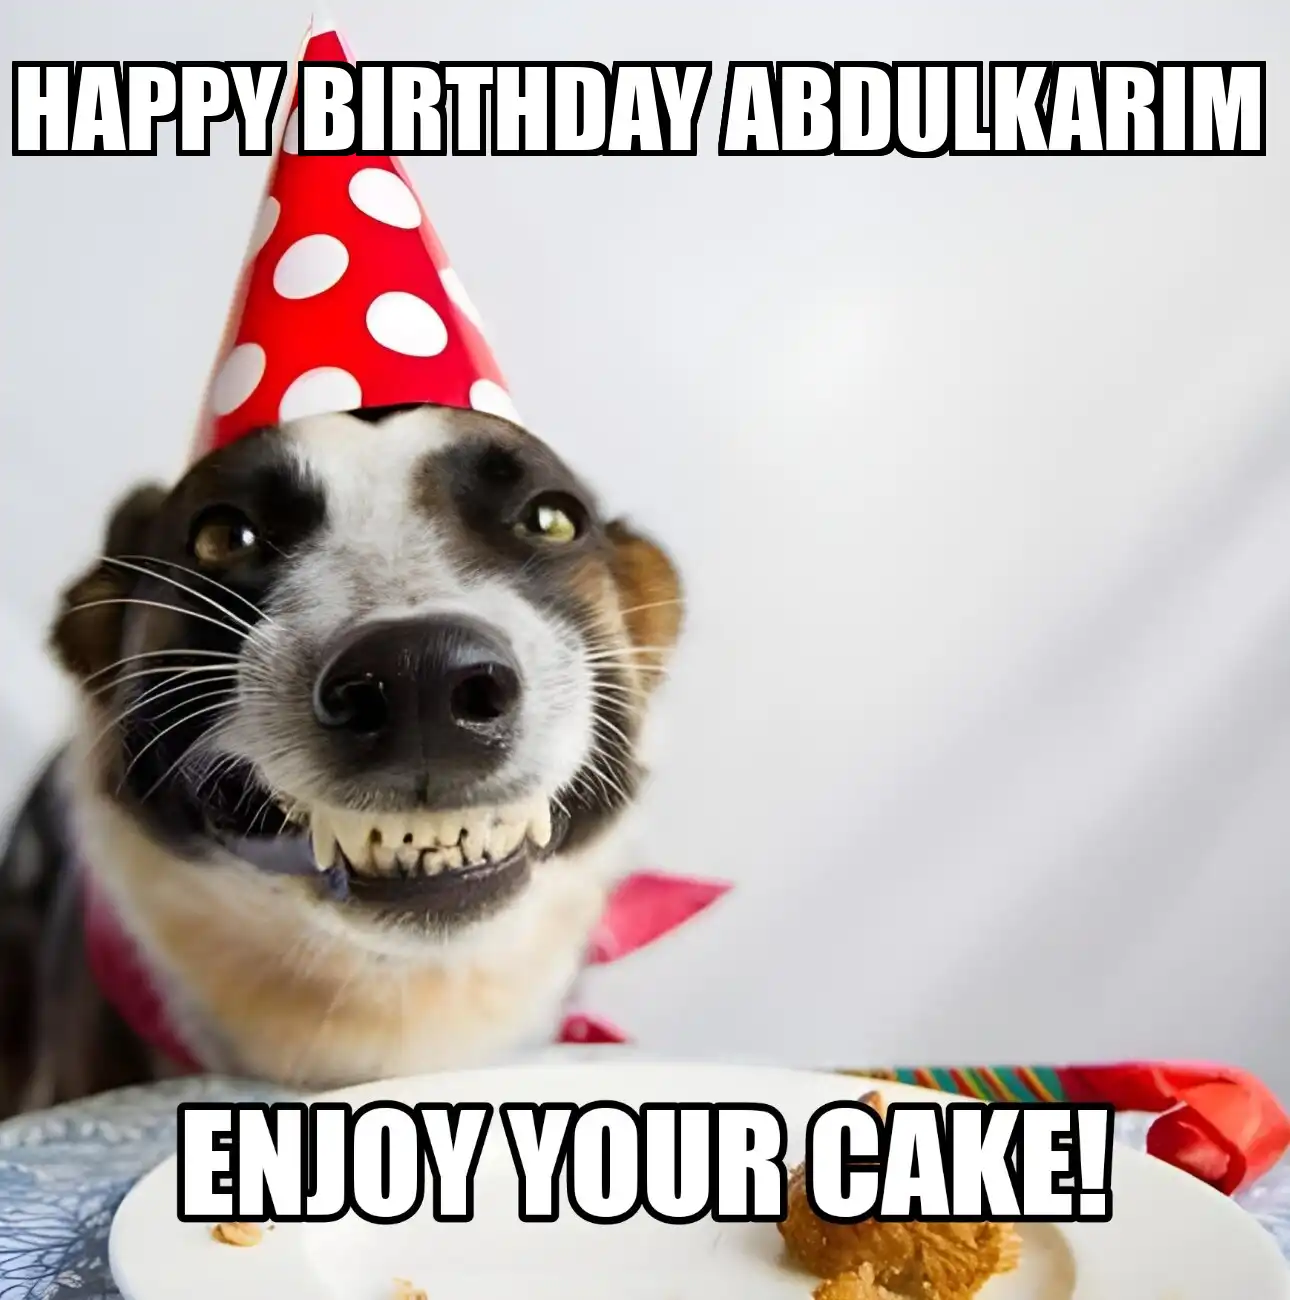 Happy Birthday Abdulkarim Enjoy Your Cake Dog Meme